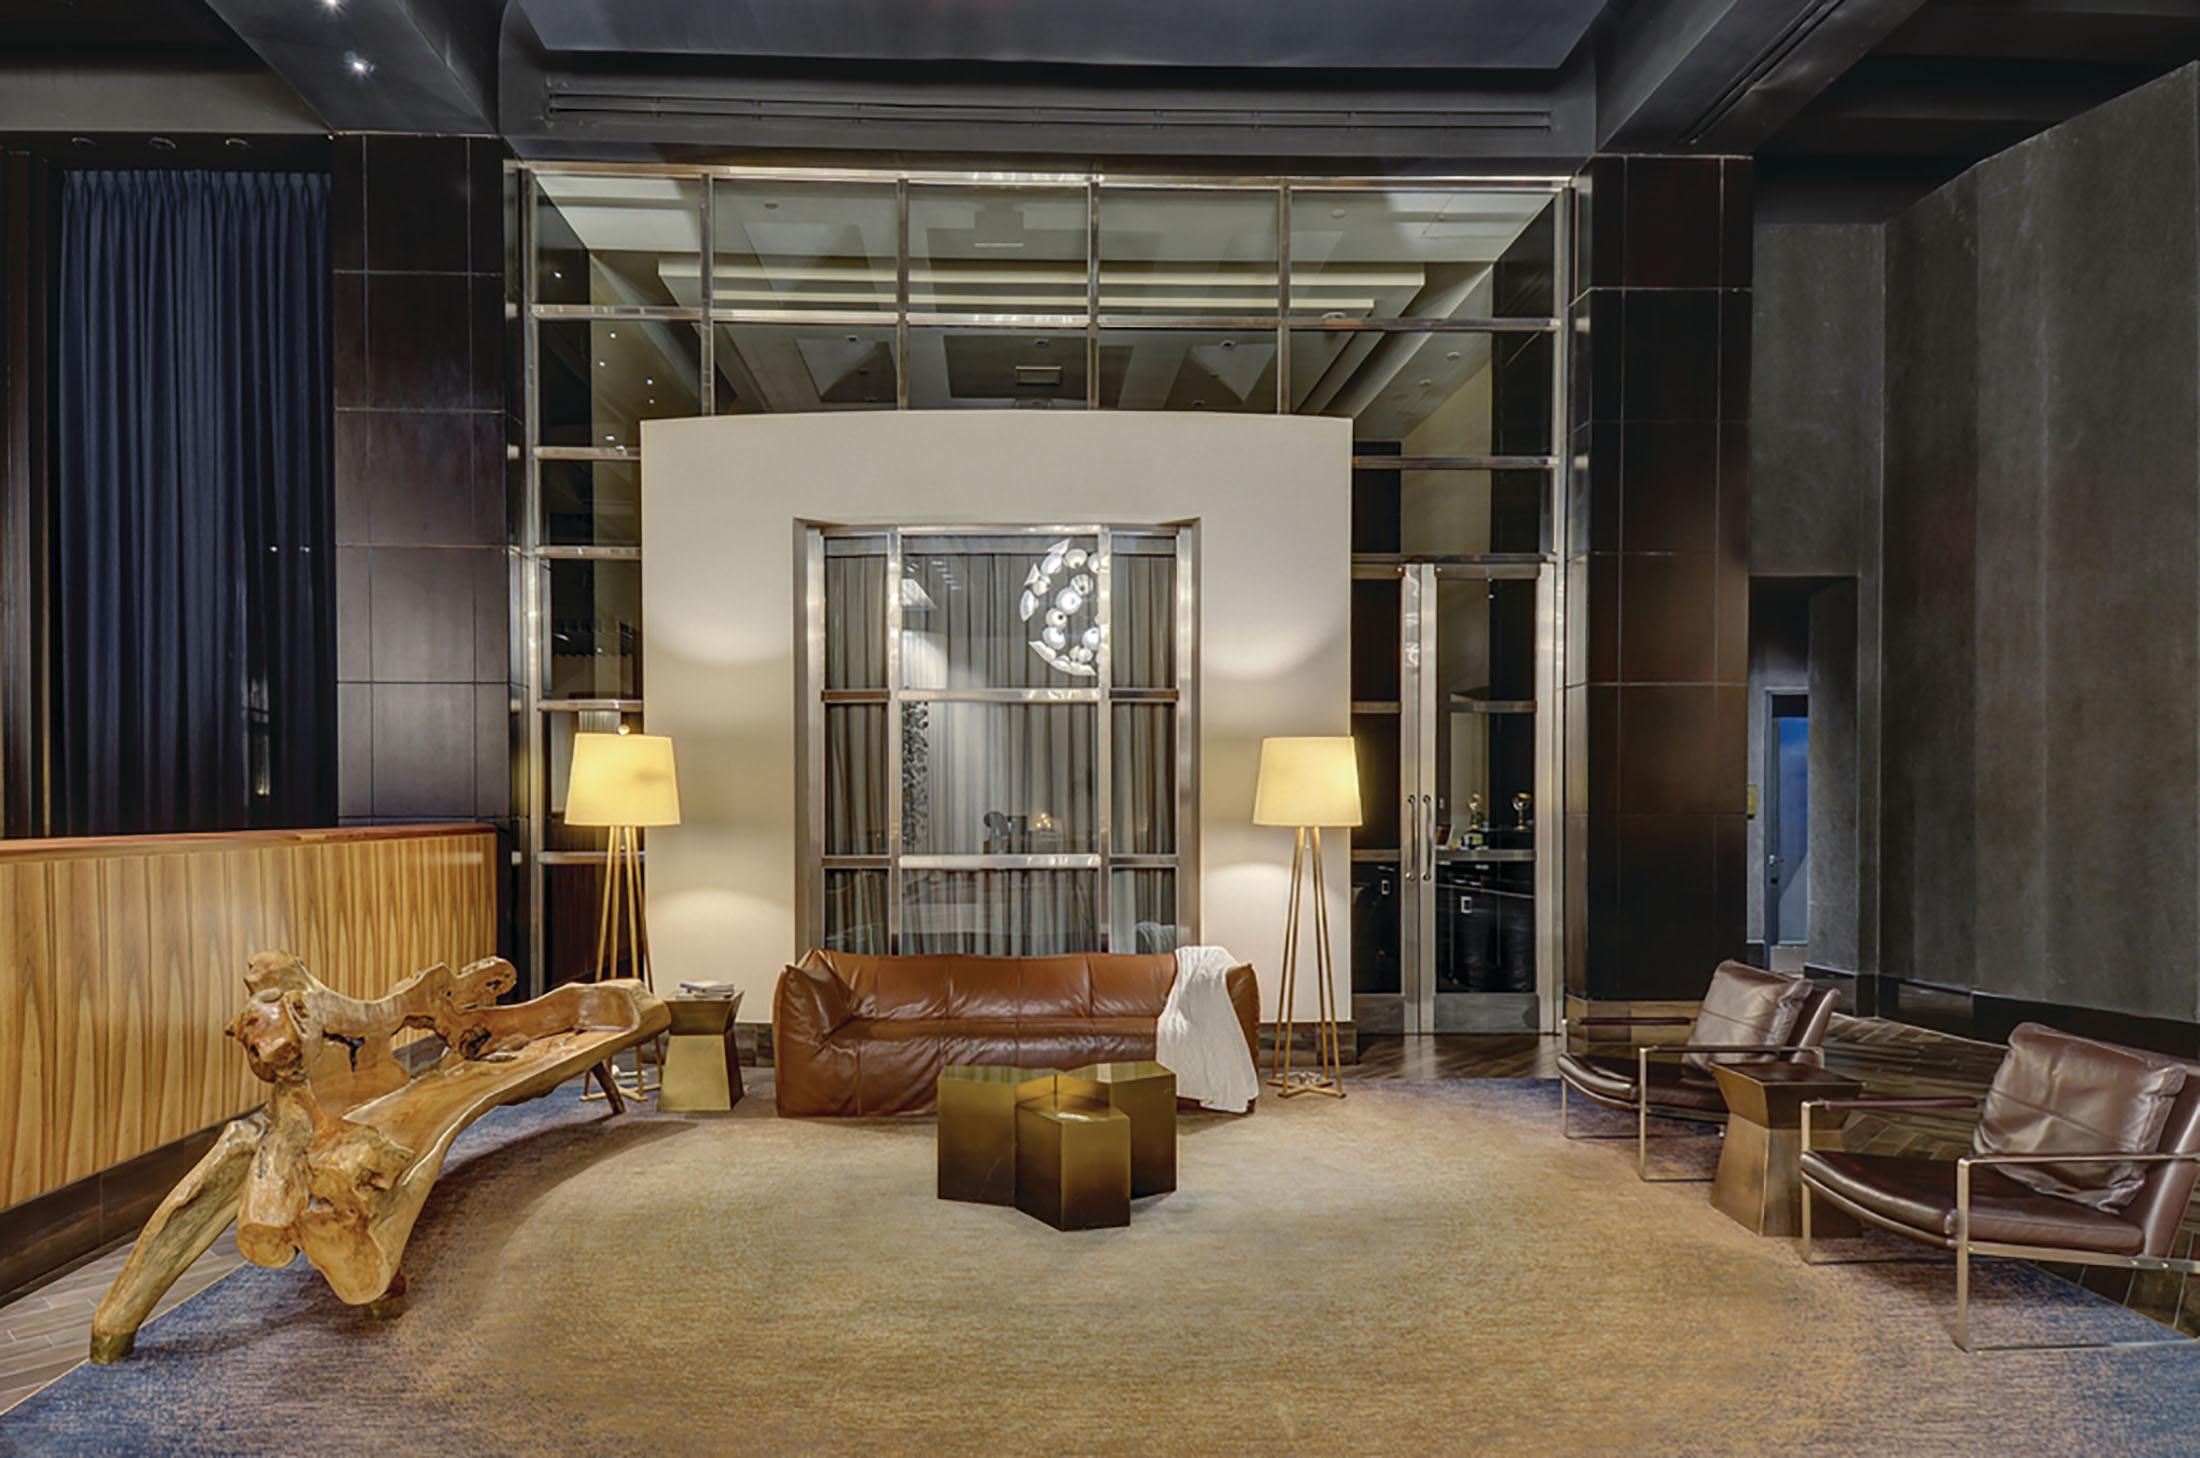 A lobby sitting area with minimalist design